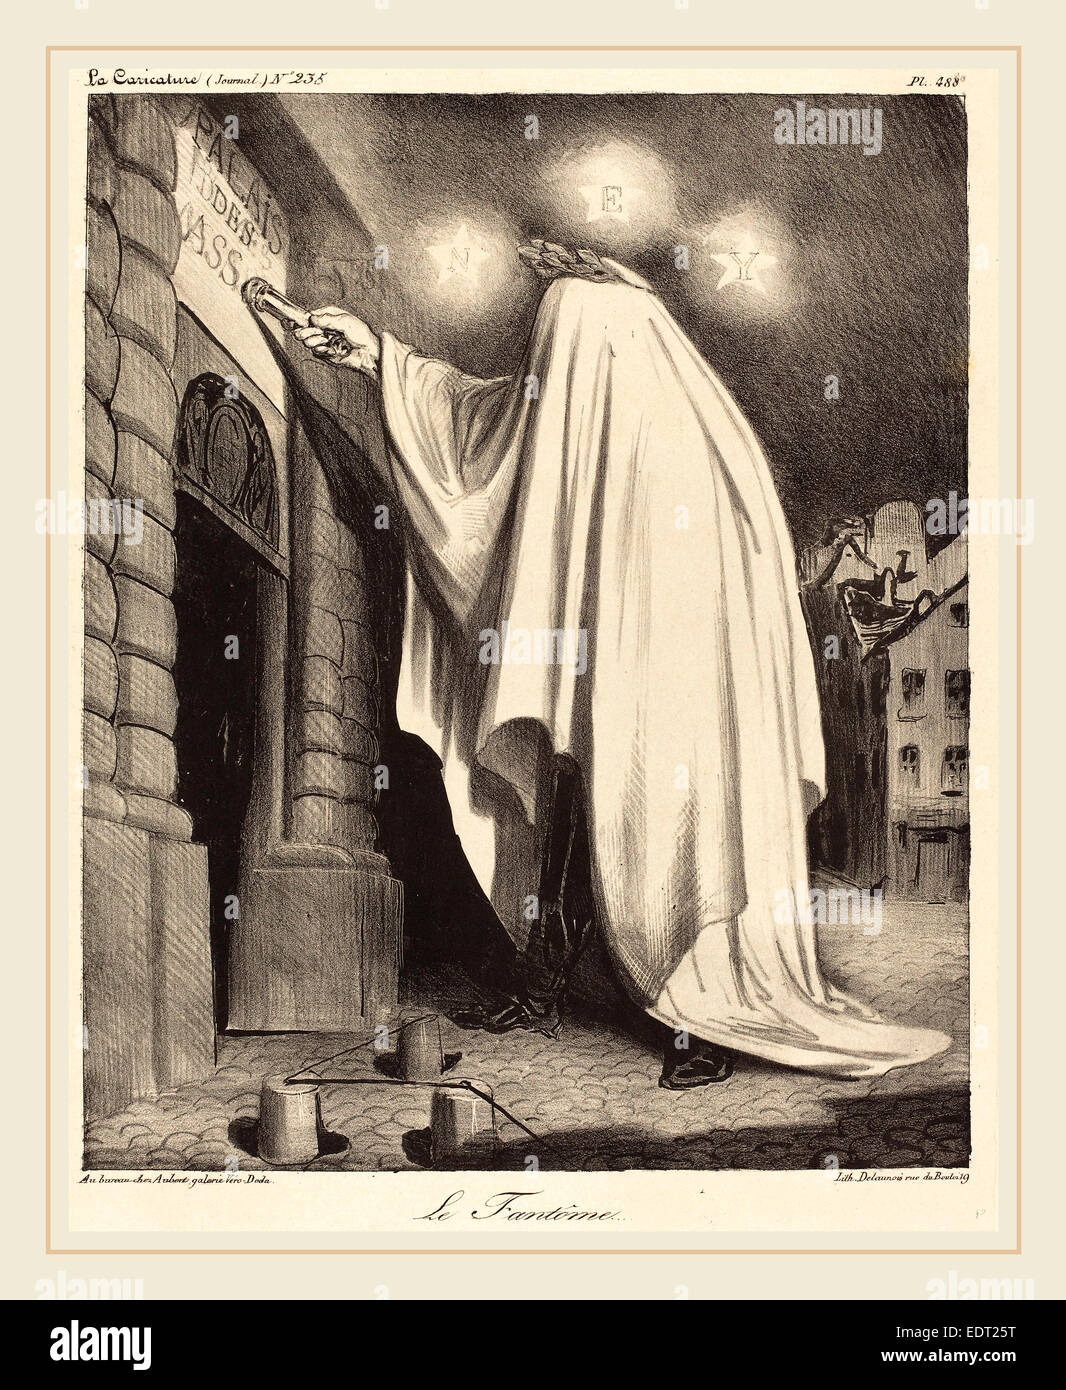 Honoré Daumier (French, 1808-1879), Le Fantome, 1835, lithograph Stock Photo